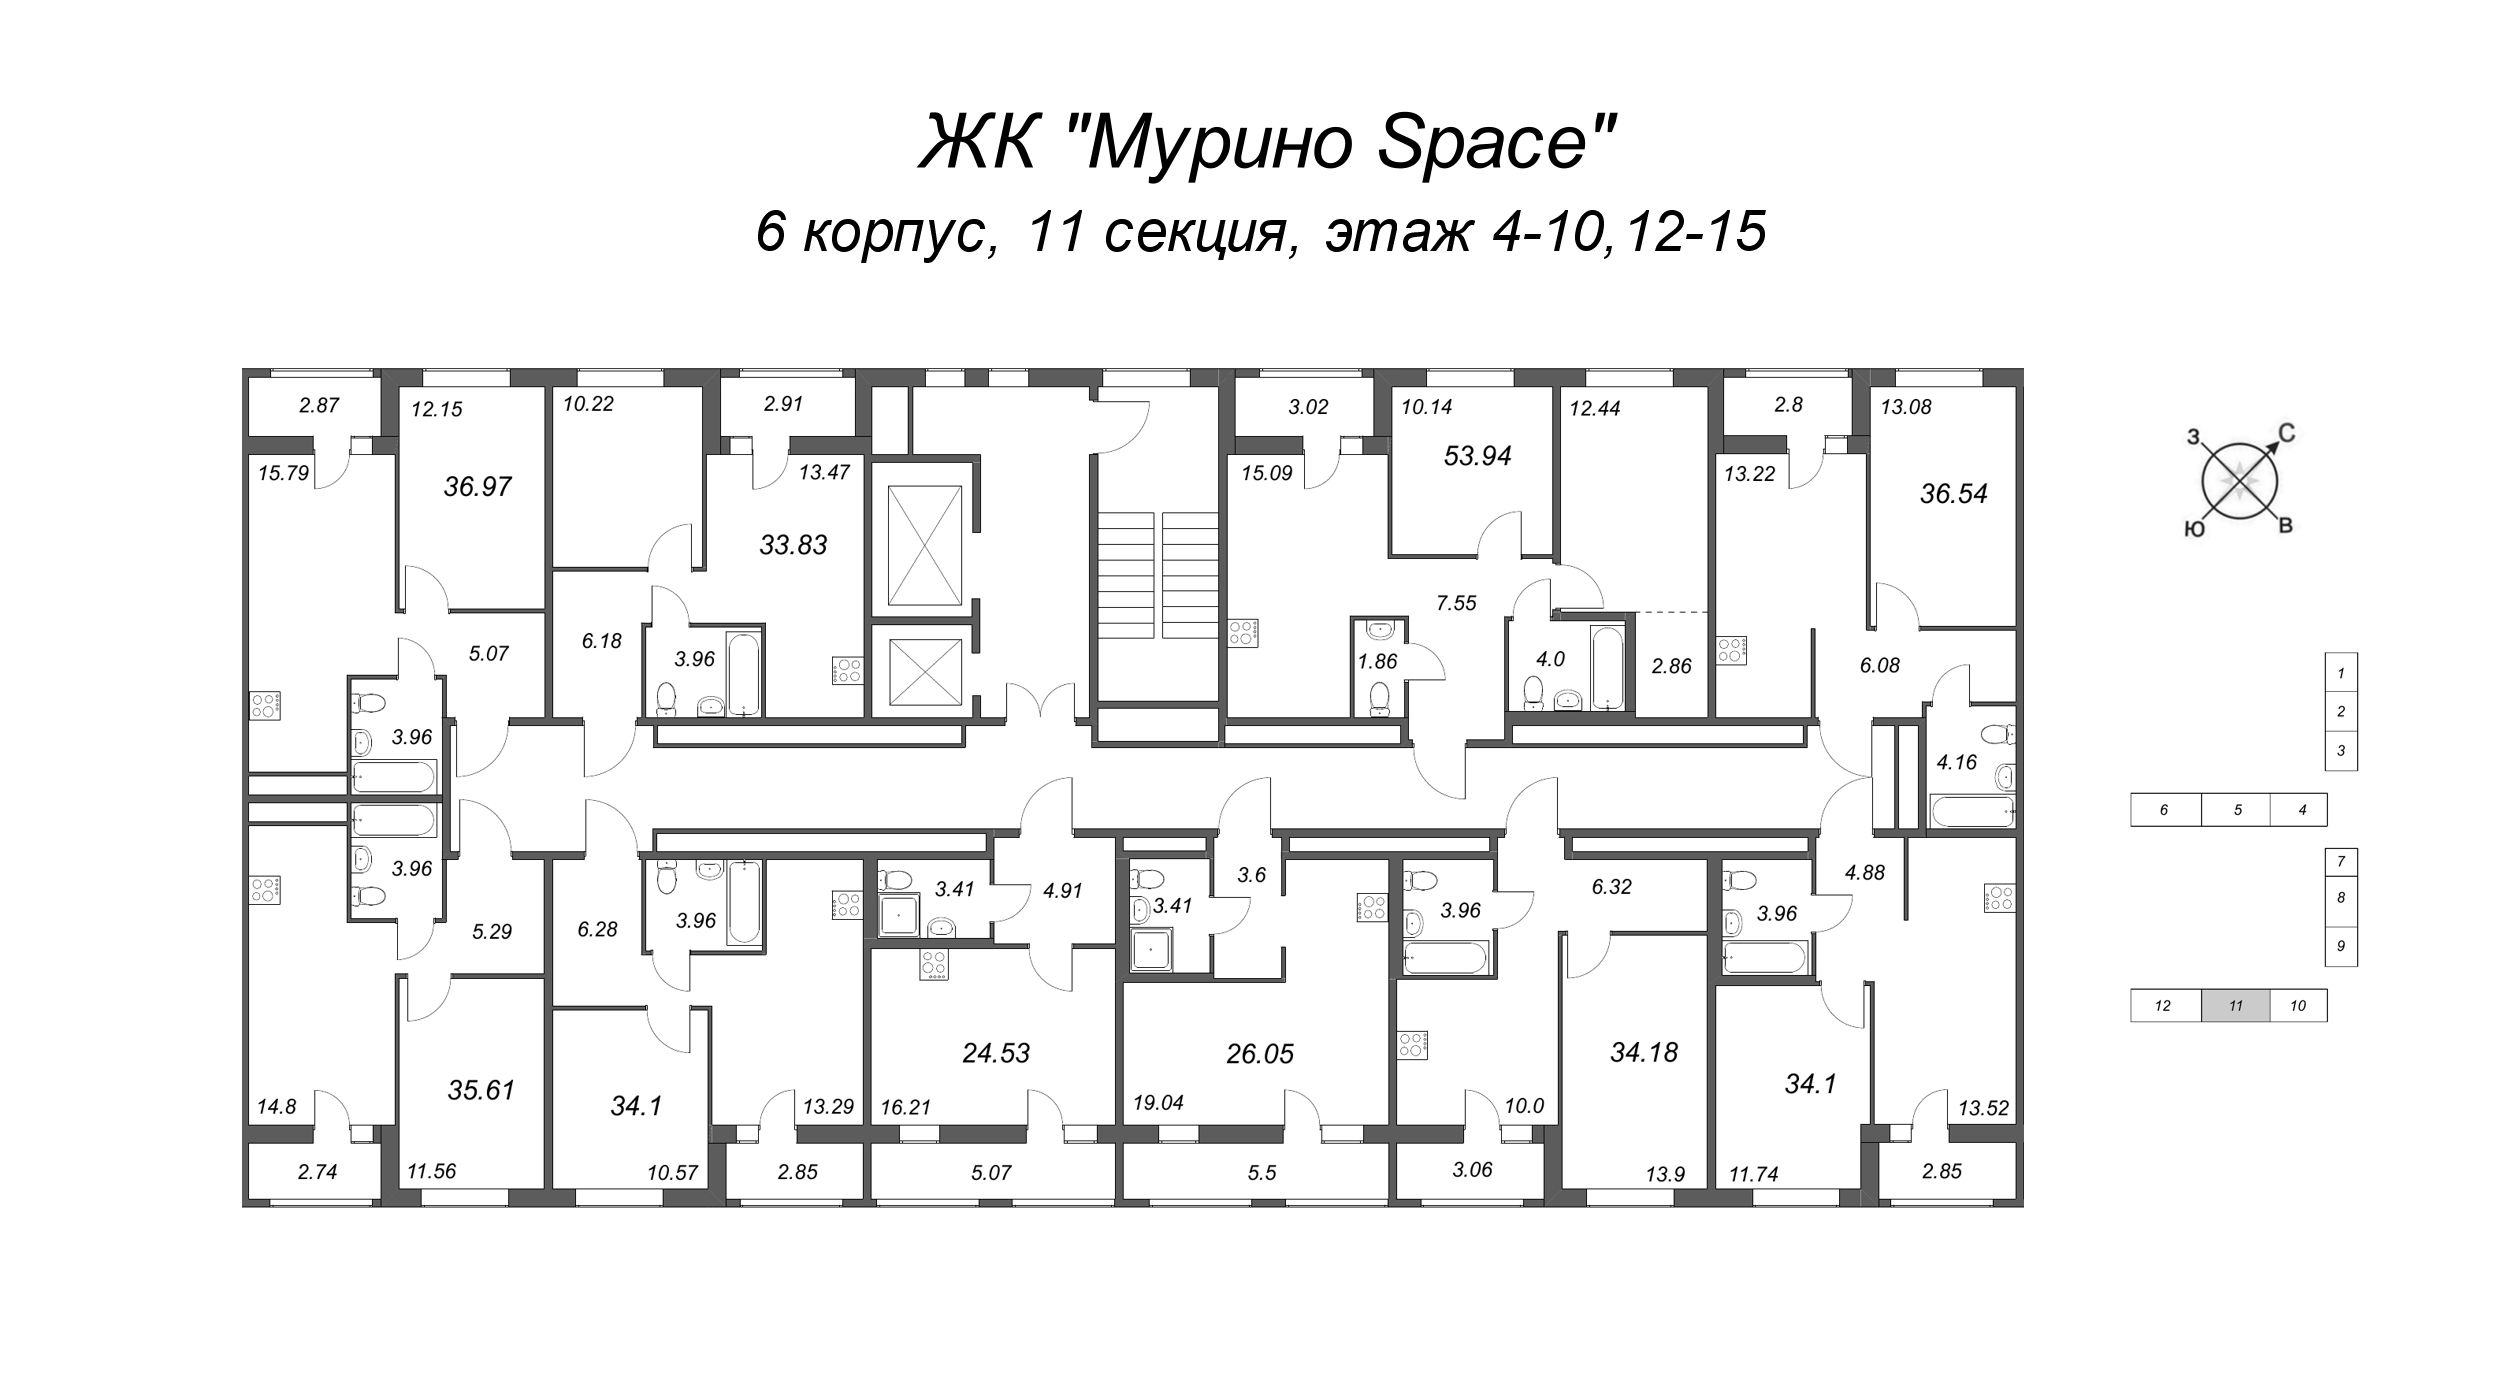 3-комнатная (Евро) квартира, 53.94 м² в ЖК "Мурино Space" - планировка этажа